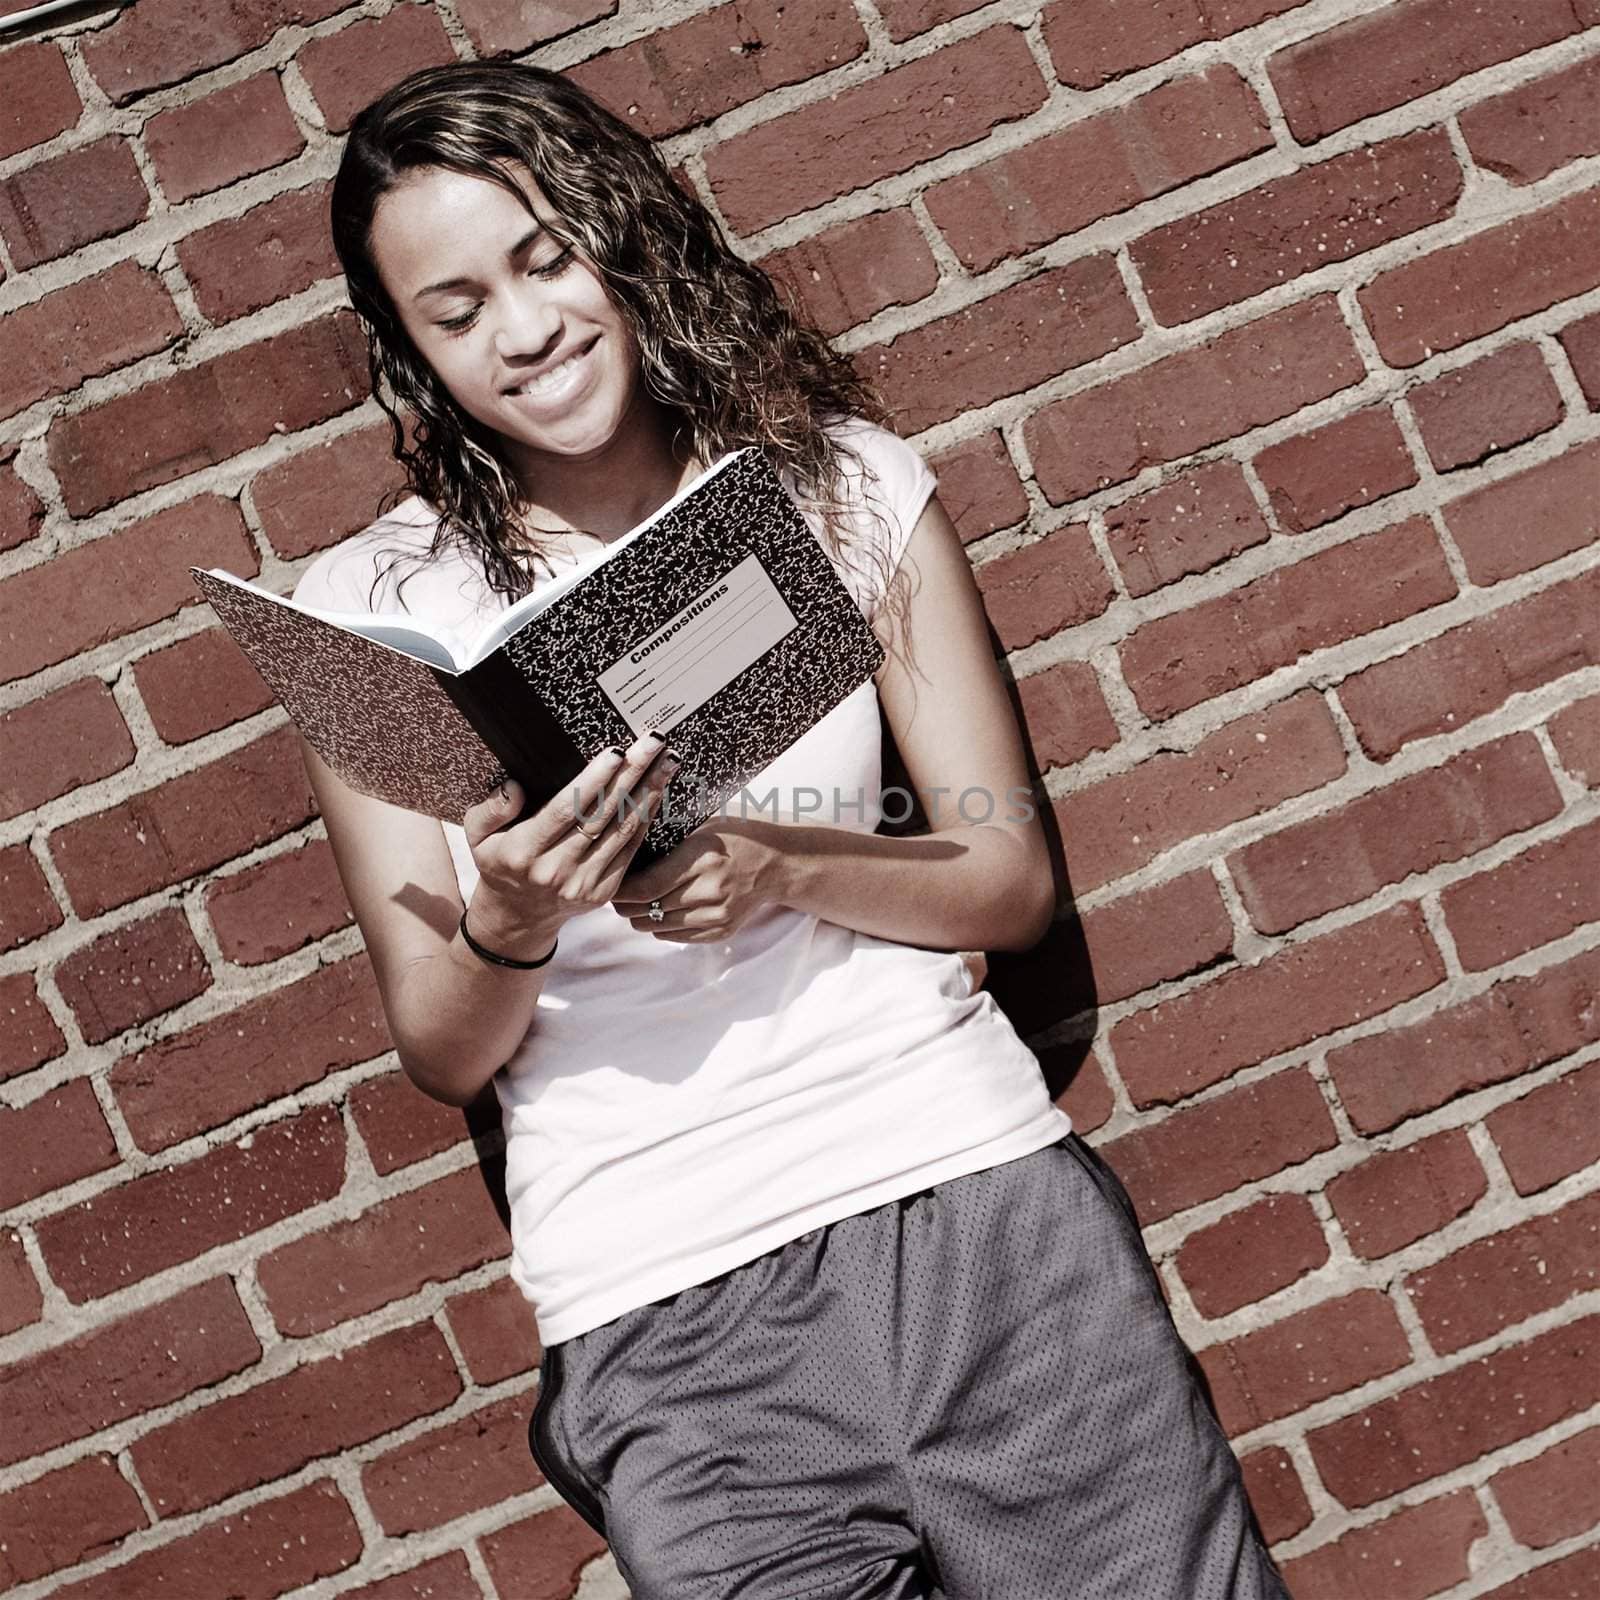 Brick Wall Notebook Girl by cardmaverick